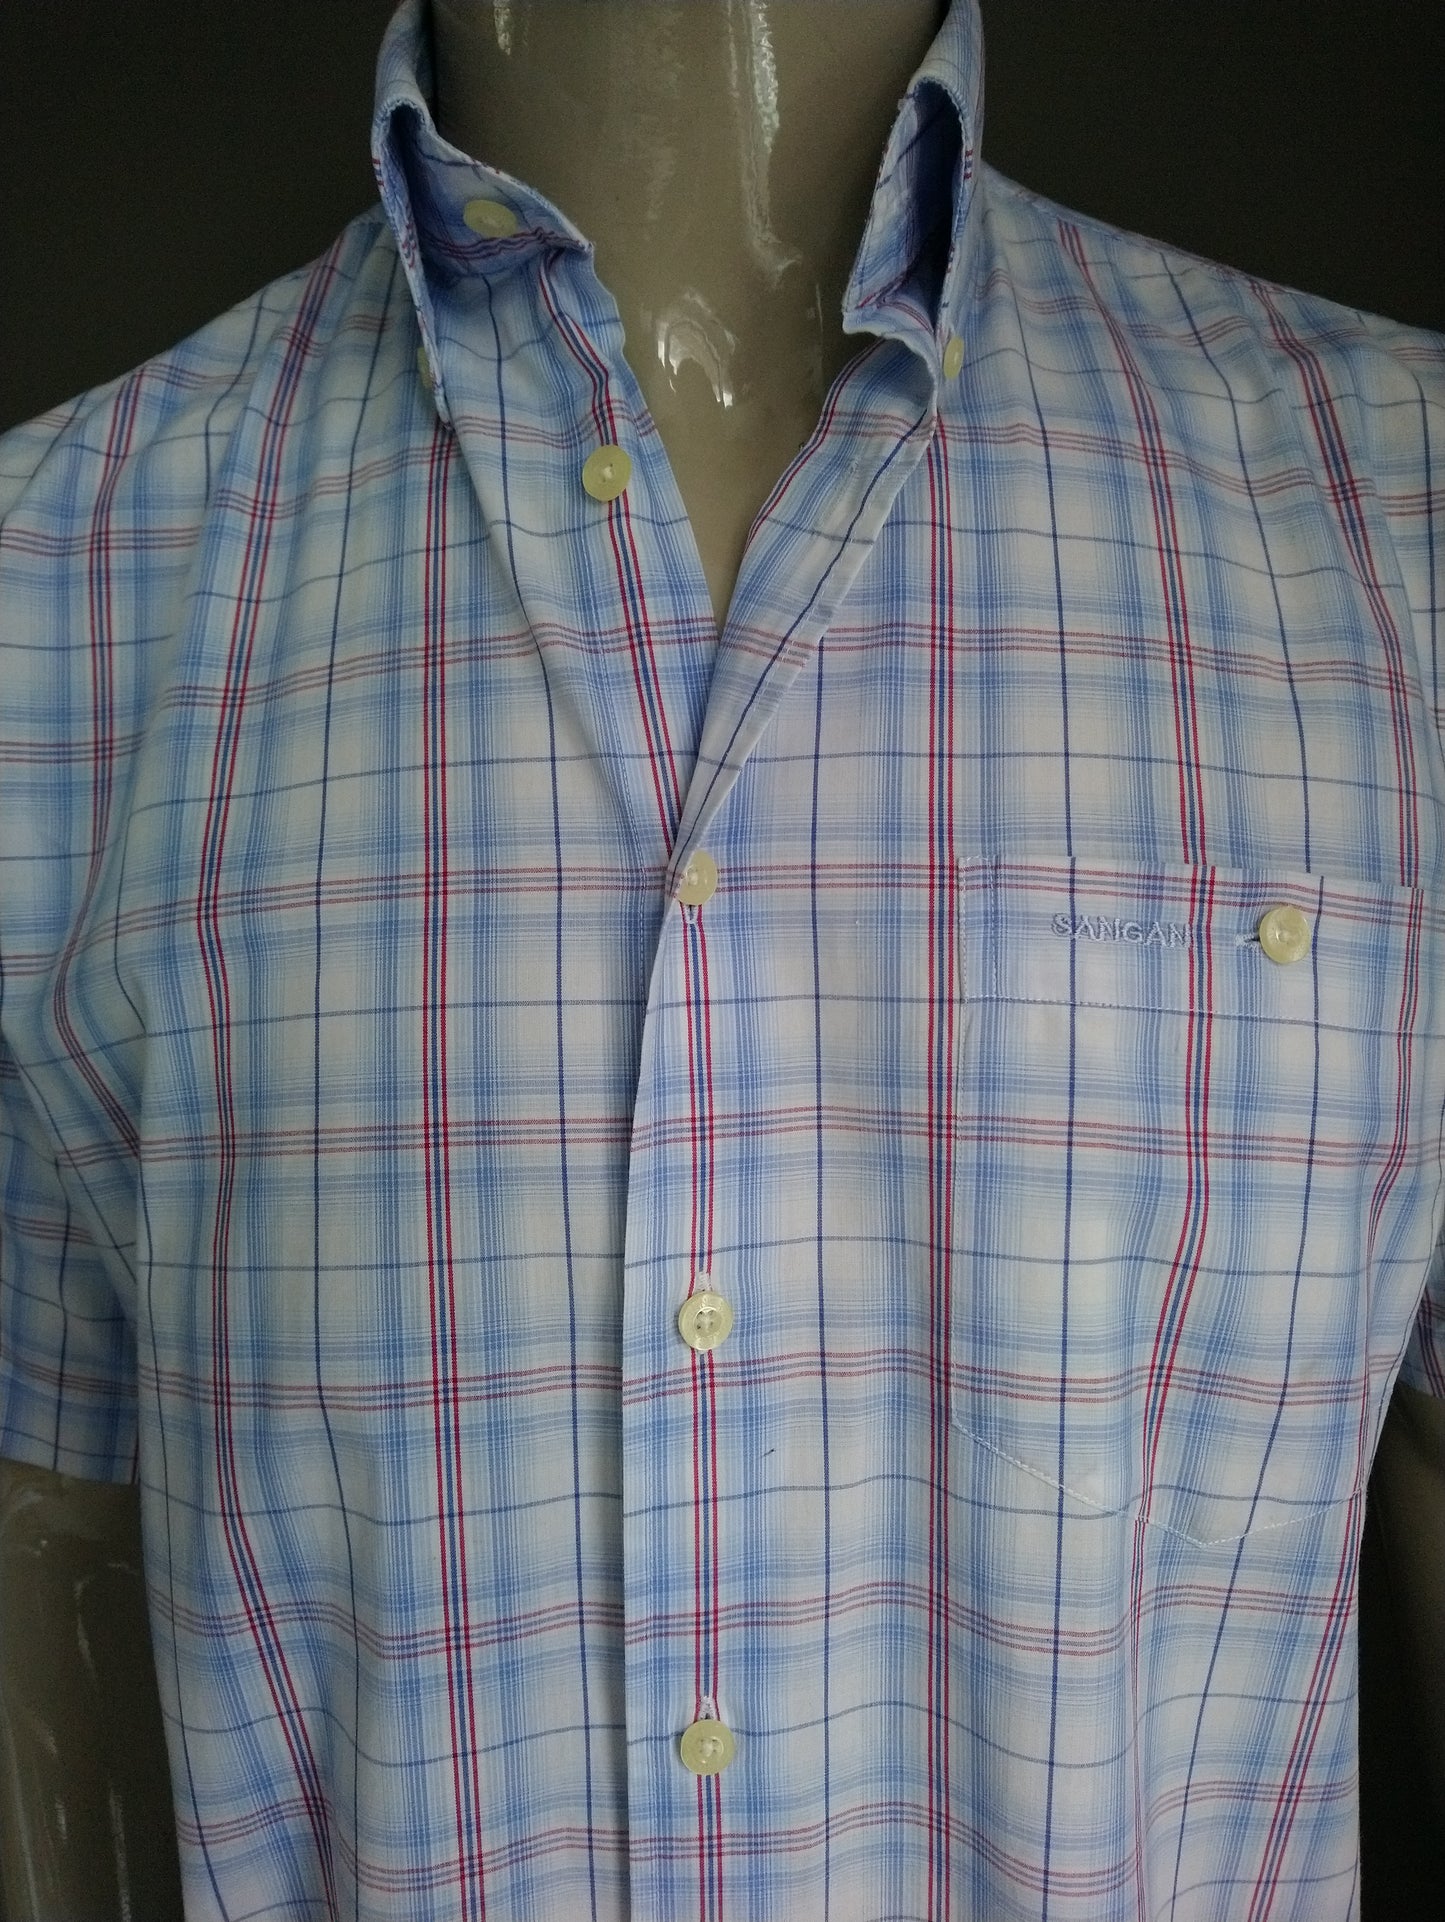 Sangan shirt short sleeve. Red blue white checkered. Size M.